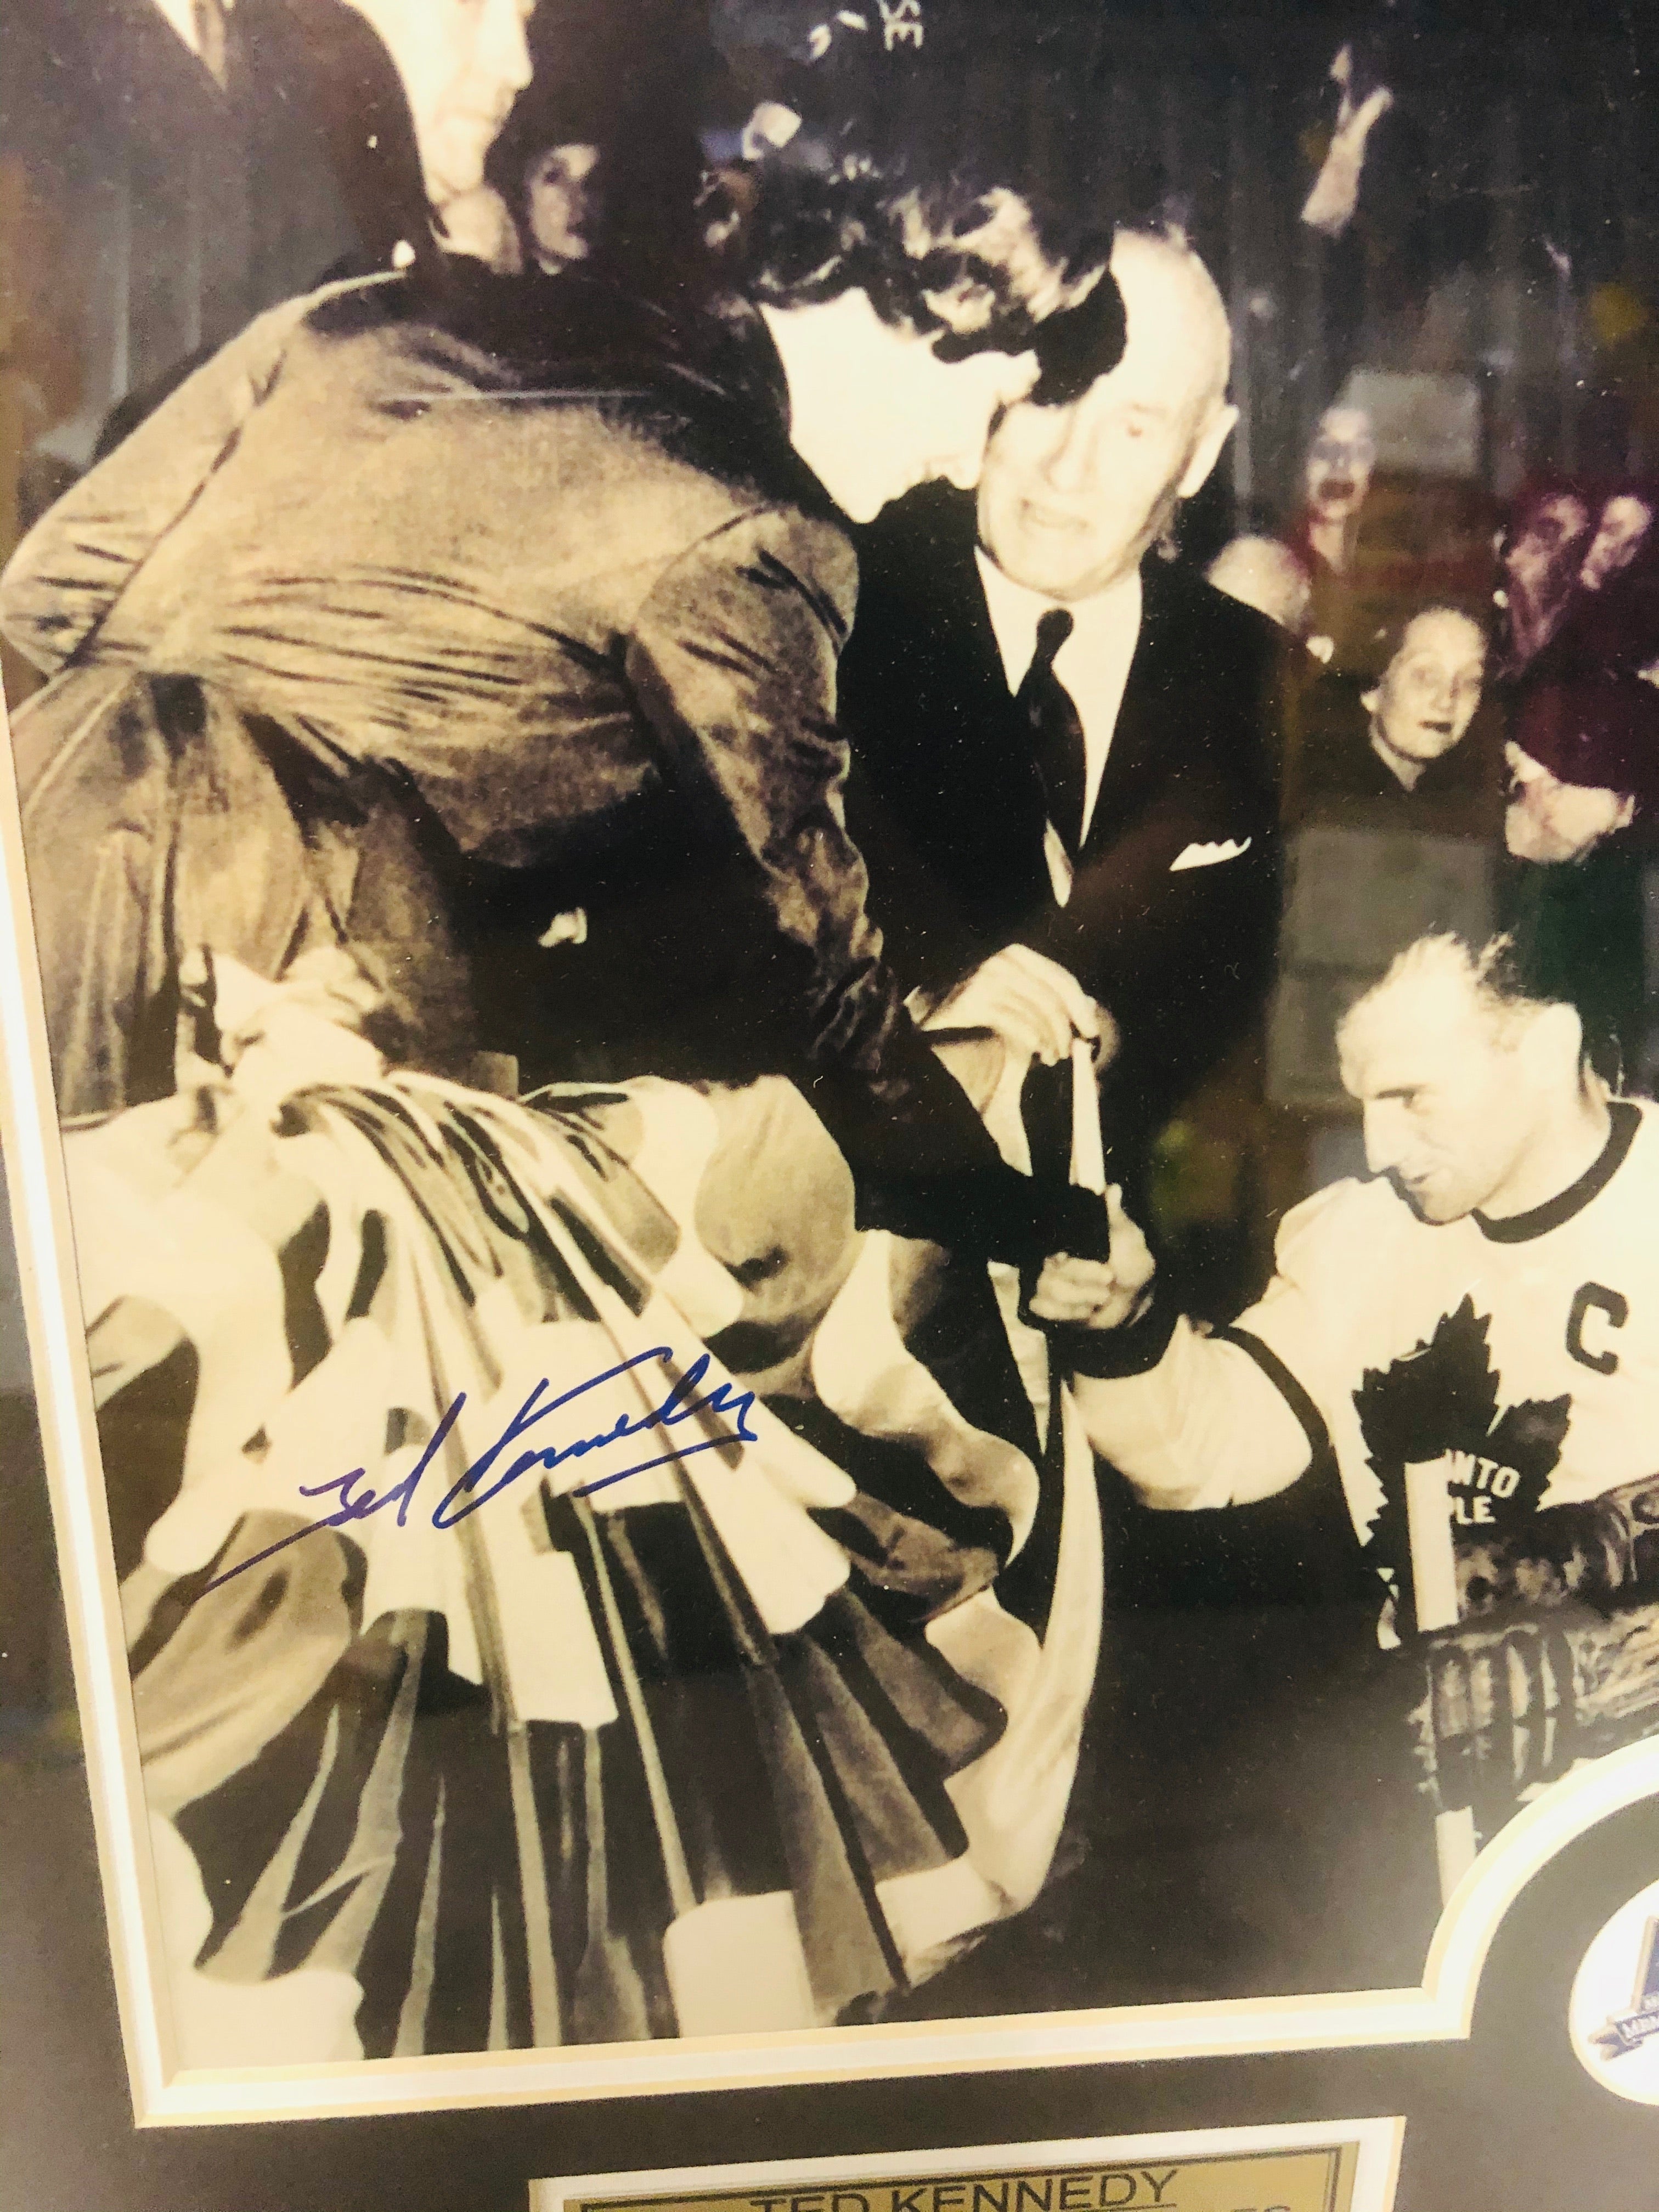 Toronto Maple Leafs hockey Ted Kennedy framed autograph photo with COA